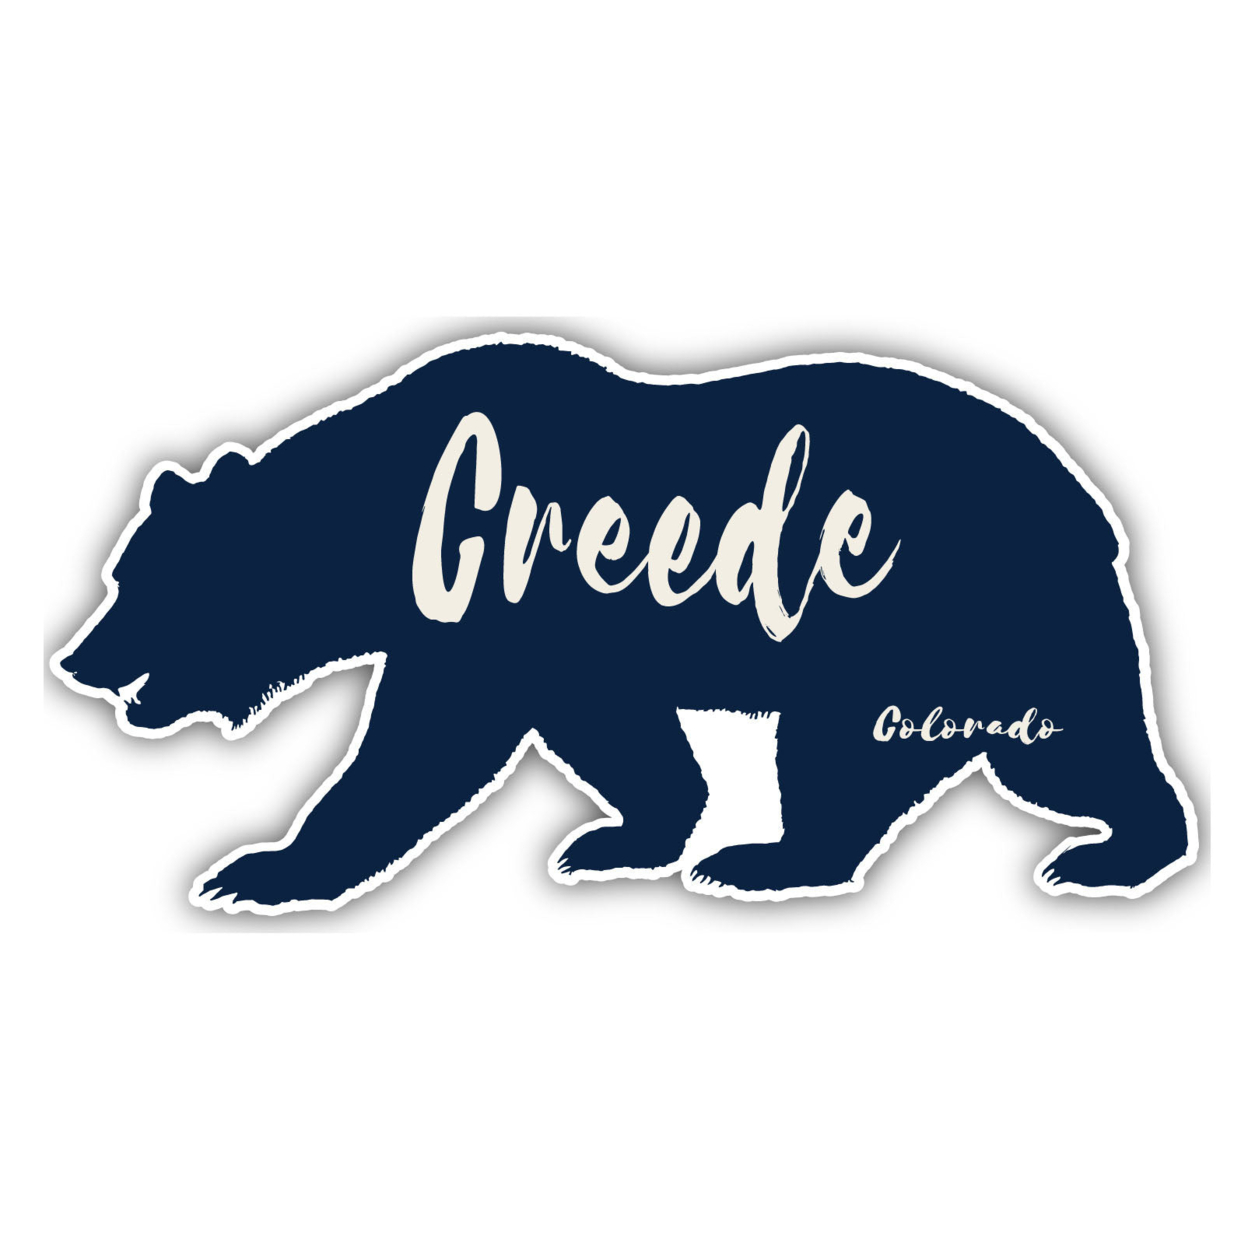 Creede Colorado Souvenir Decorative Stickers (Choose Theme And Size) - Single Unit, 10-Inch, Tent